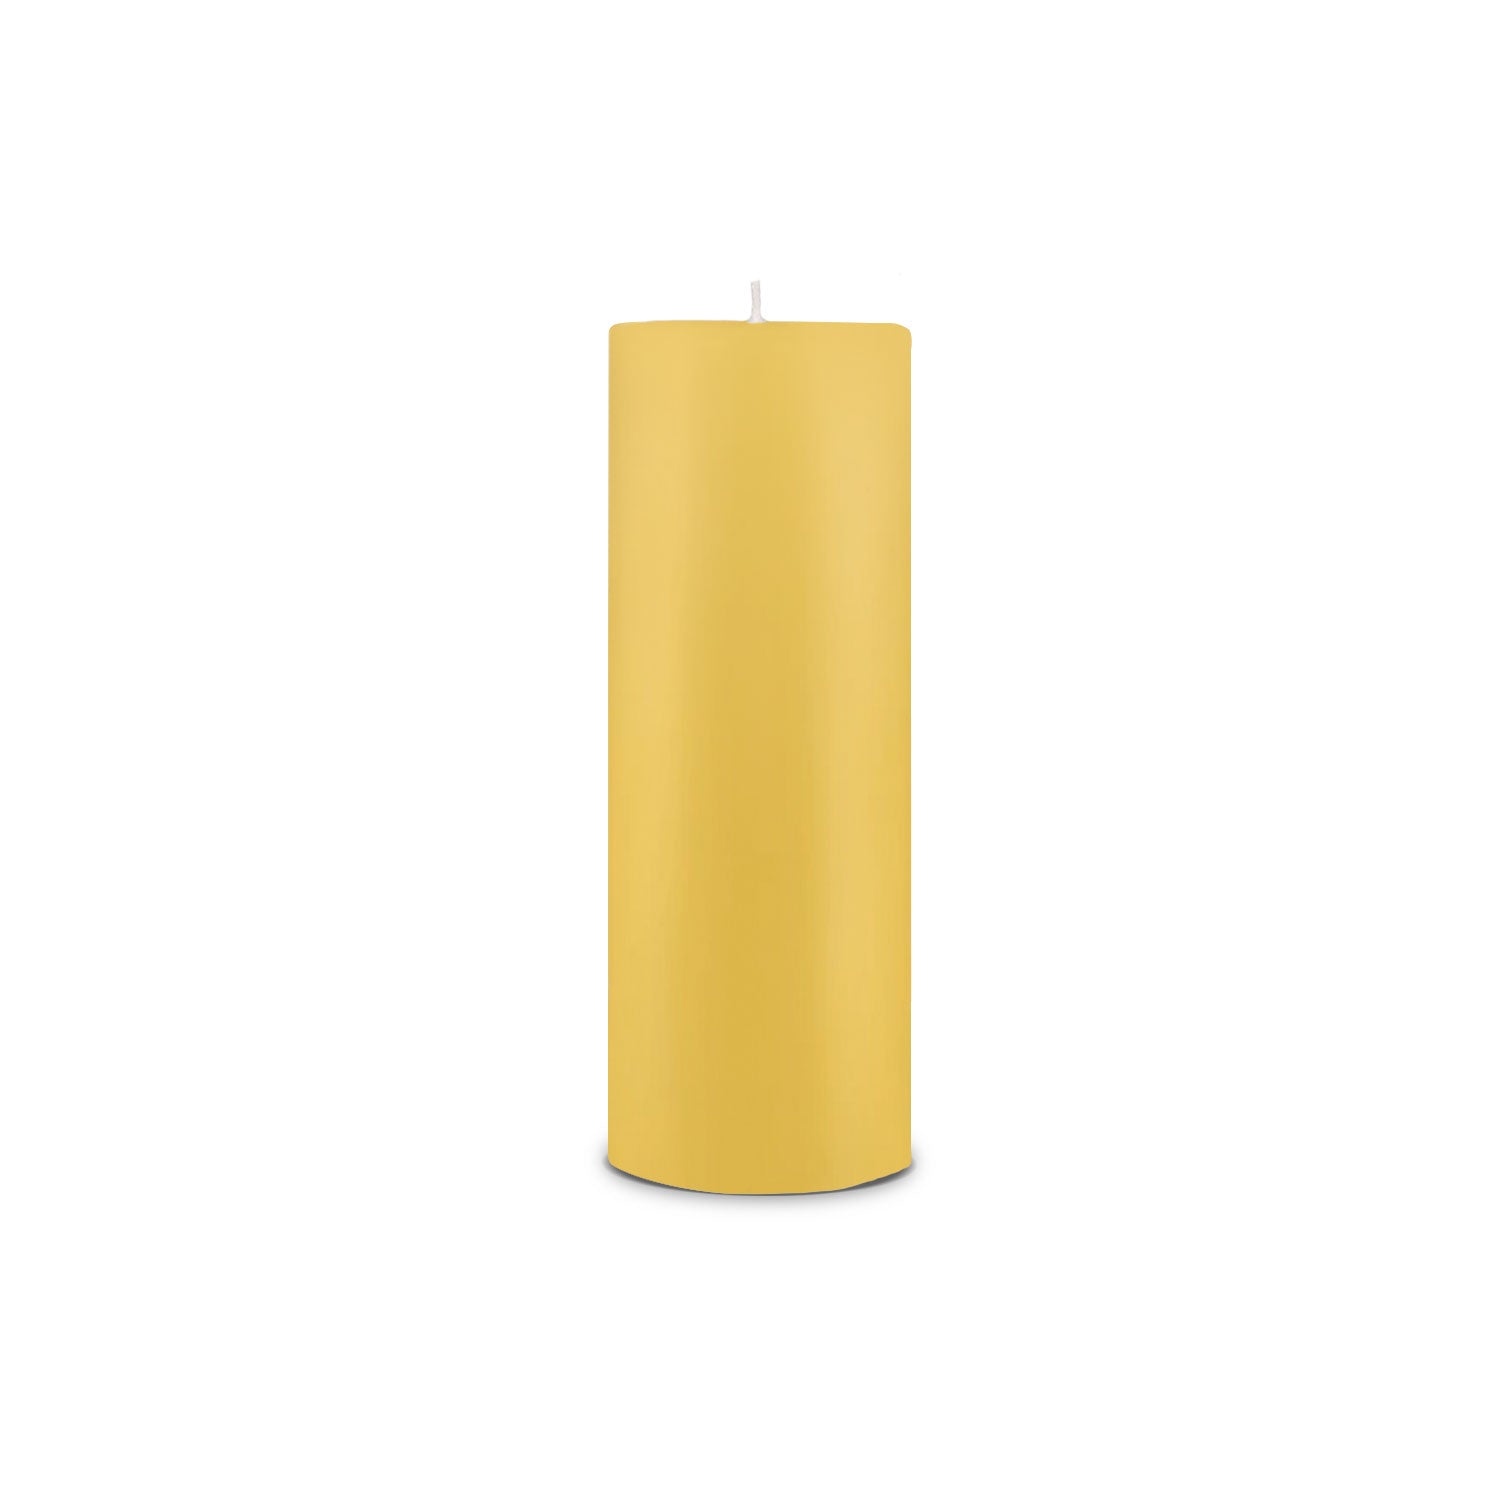 2"x6" Petite Pillar Candle - honey suckle